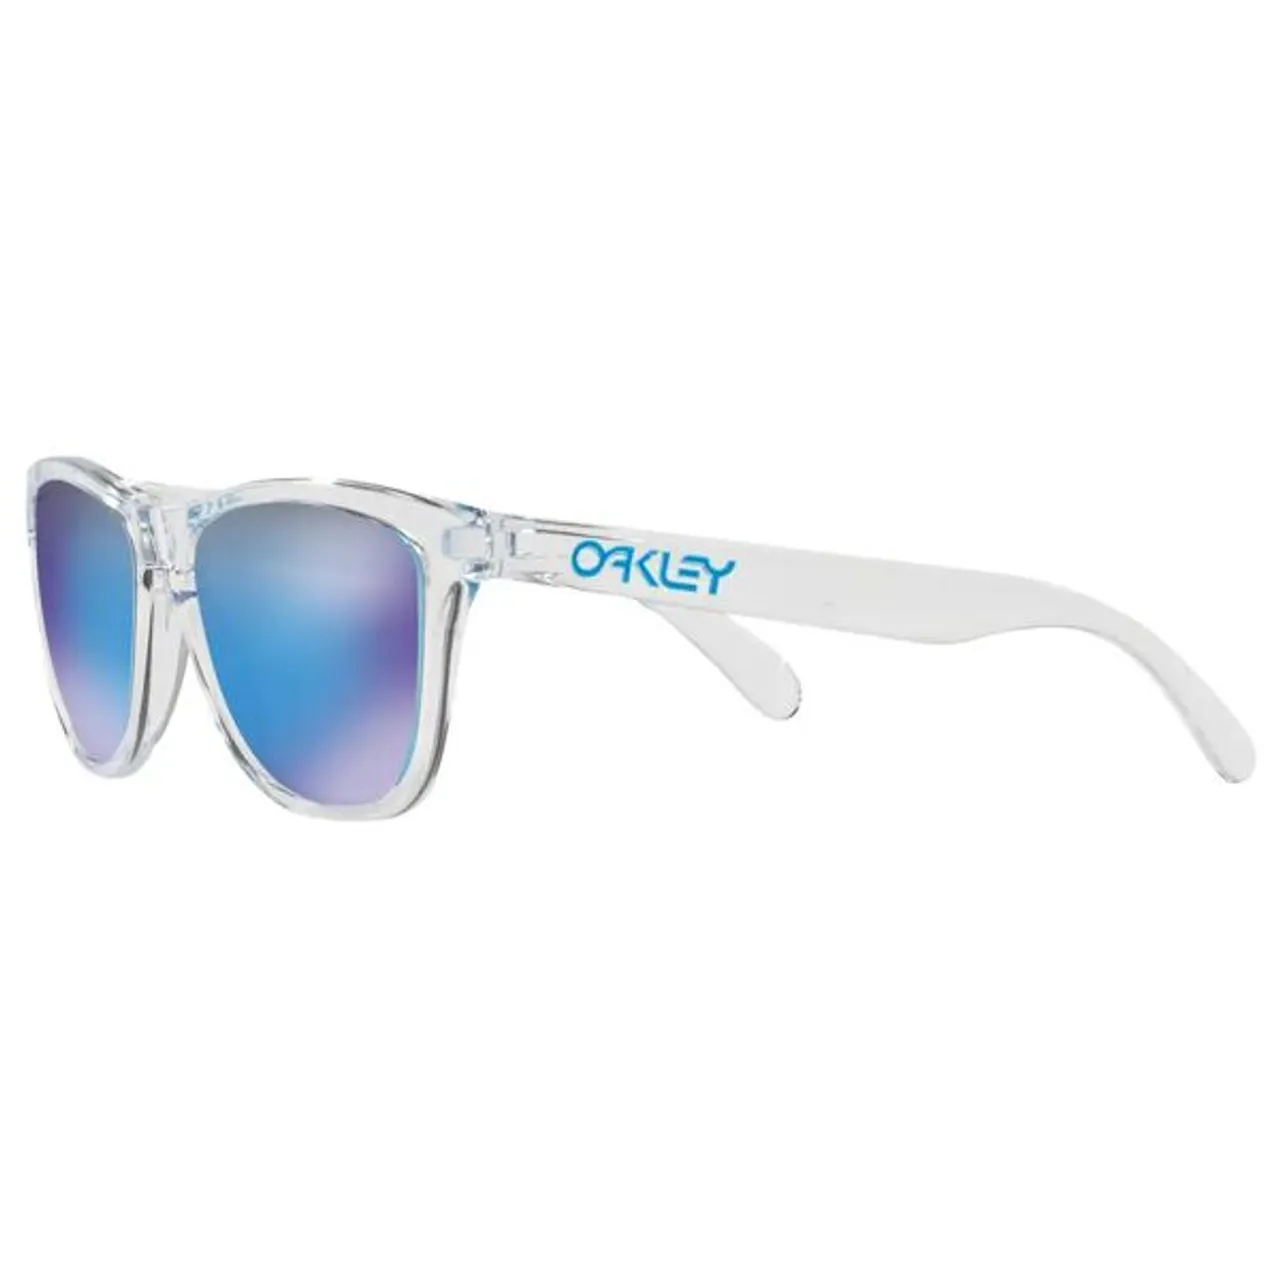 Oakley OO9013 Men's Frogskins Prizm Square Sunglasses - Clear/Iridium Sapphire - Male